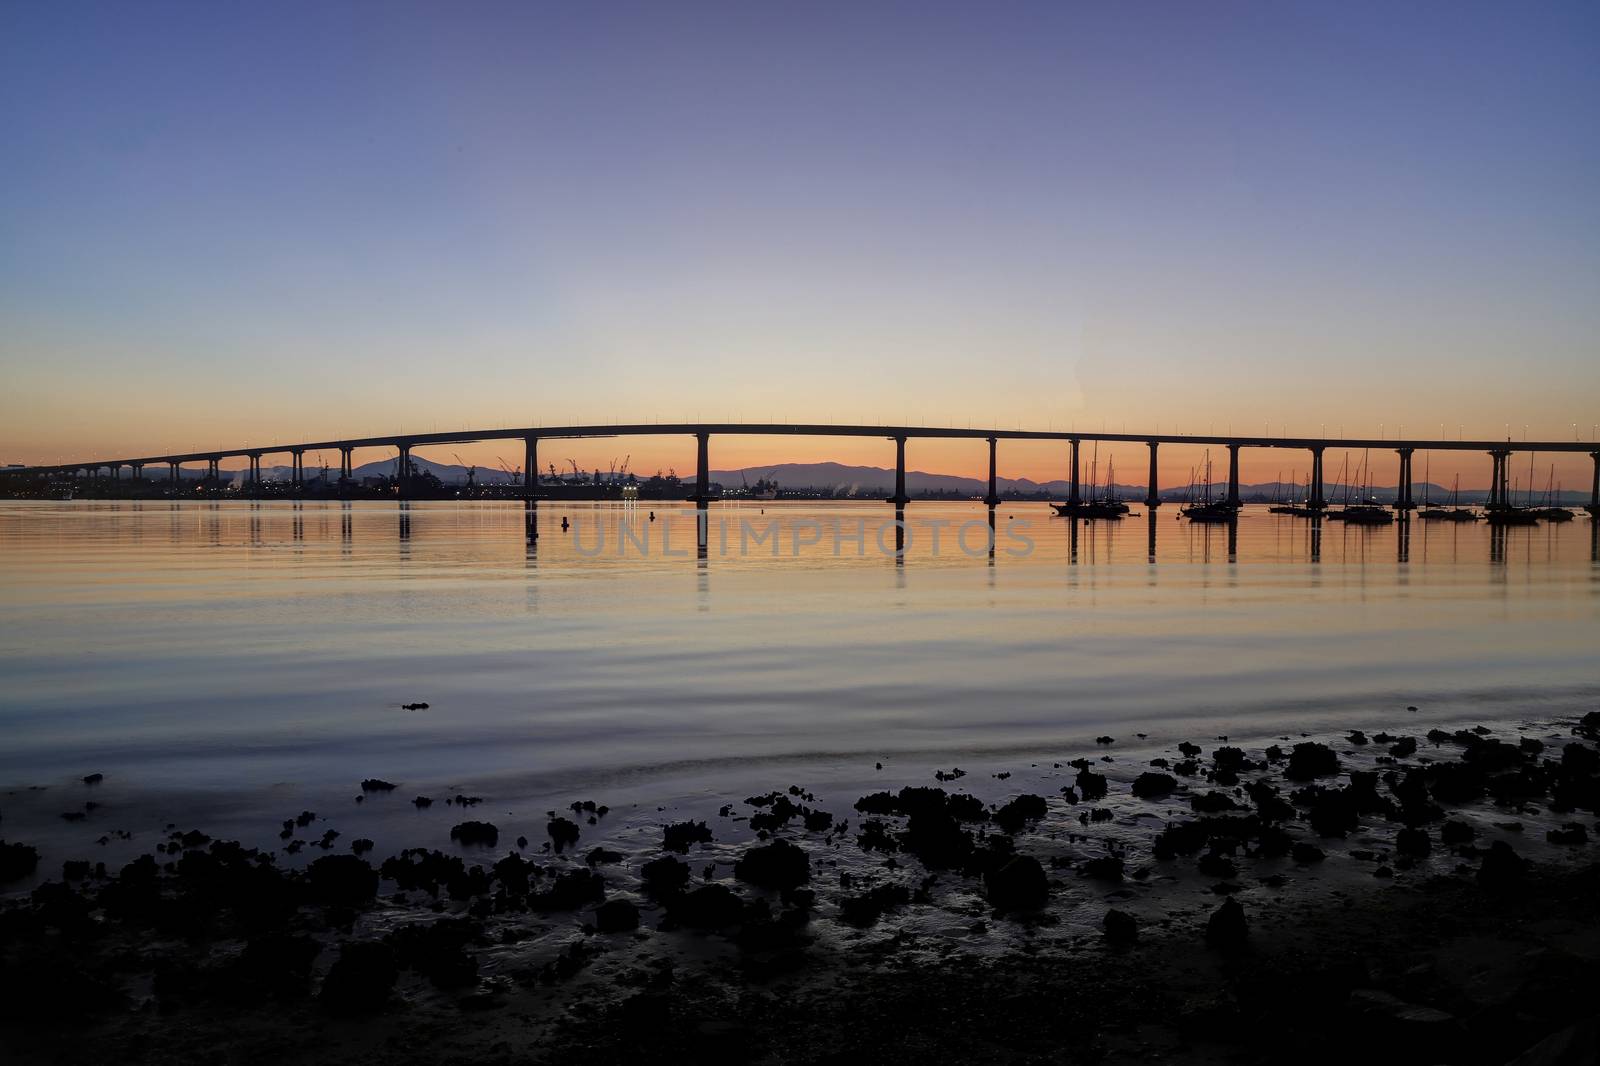 Sunrise over the Coronado Bridge in San Diego, California by jbyard22